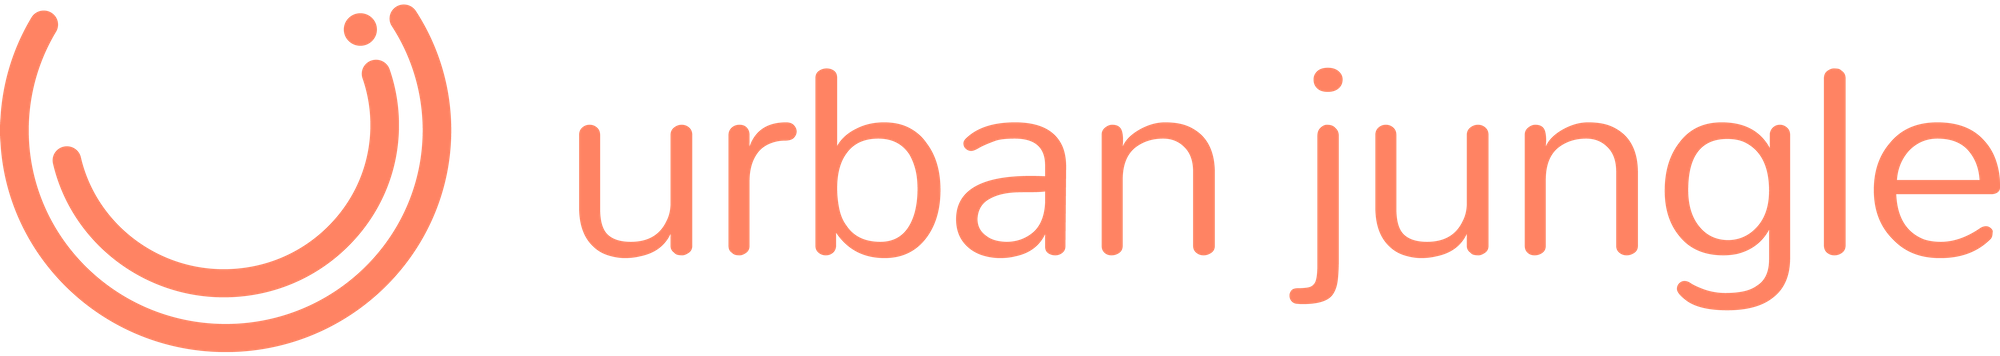 UJ-logo_orange